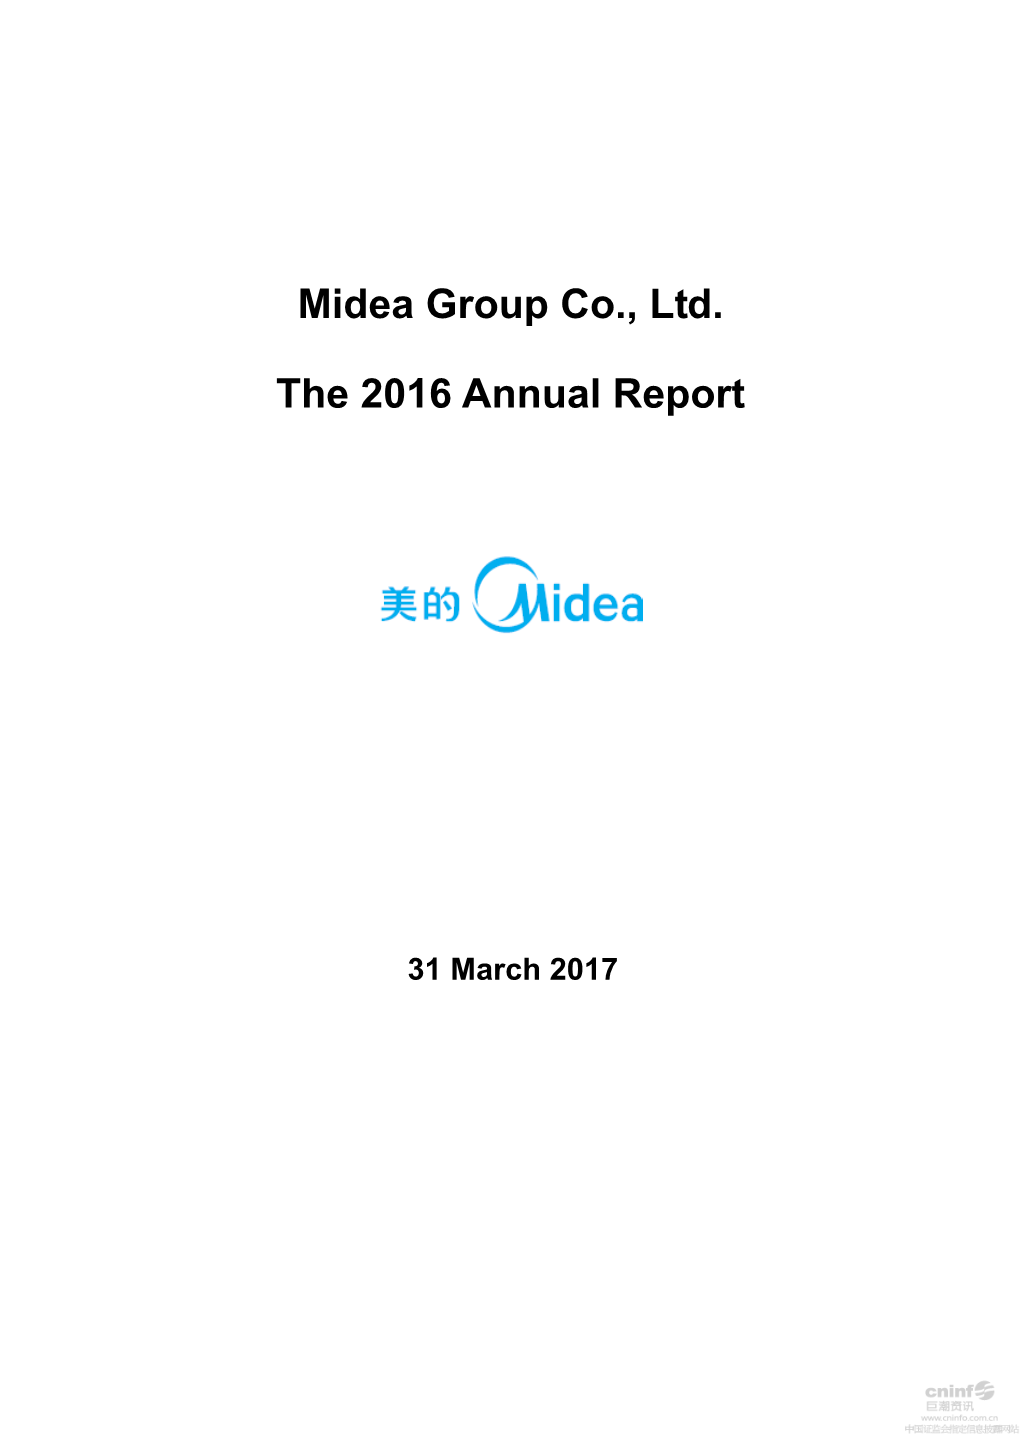 Midea Group Co., Ltd. the 2016 Annual Report